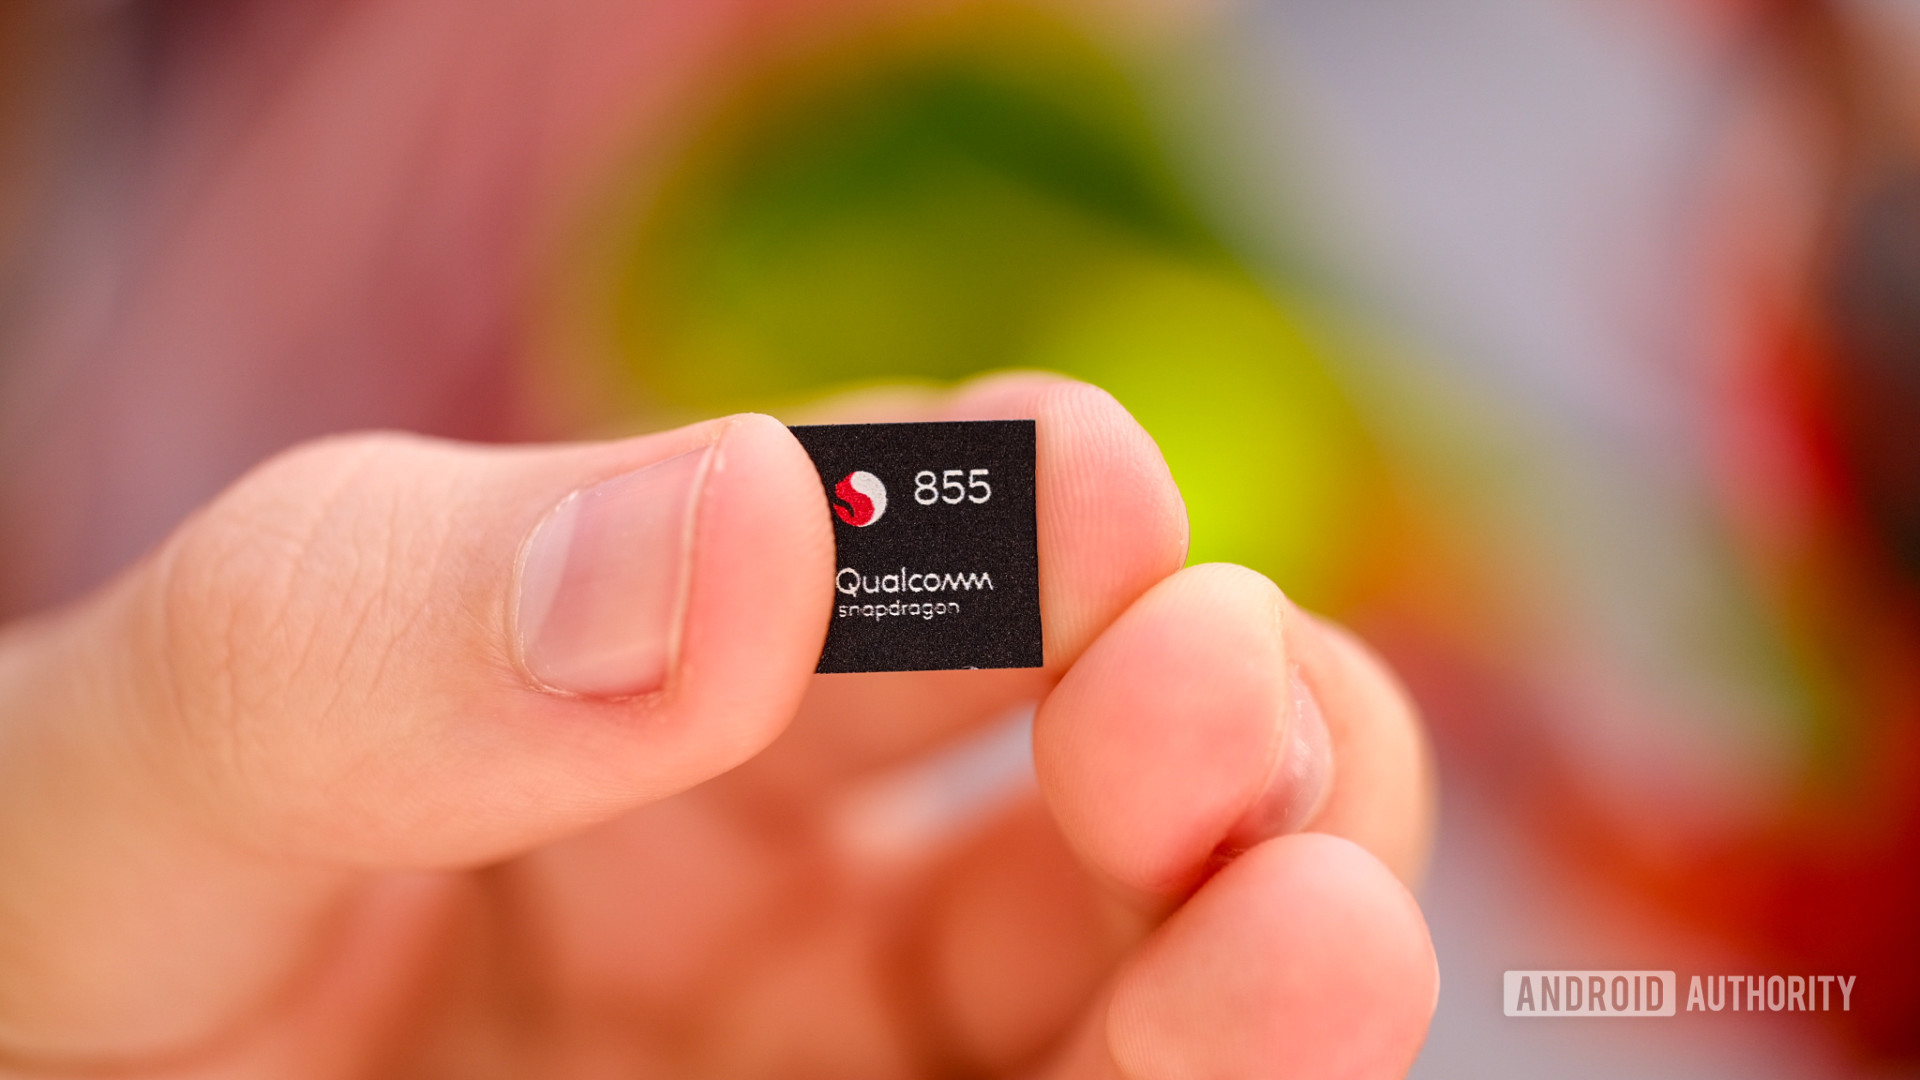 Qualcomm Snapdragon 855 chip close up